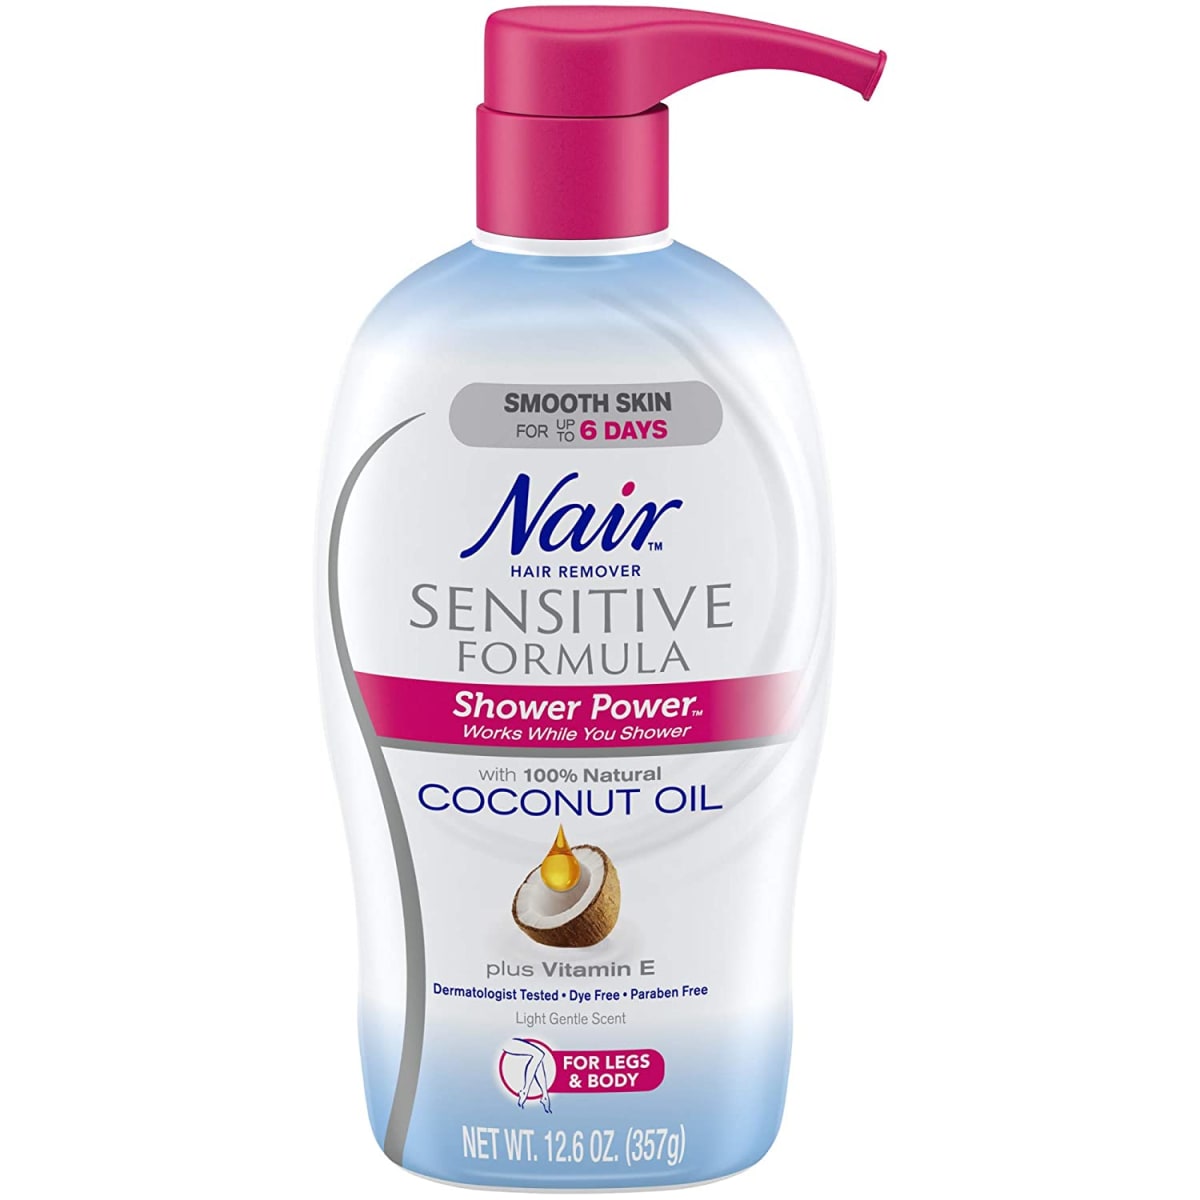 Nair Hair Remover Sensitive Formula Shower Power